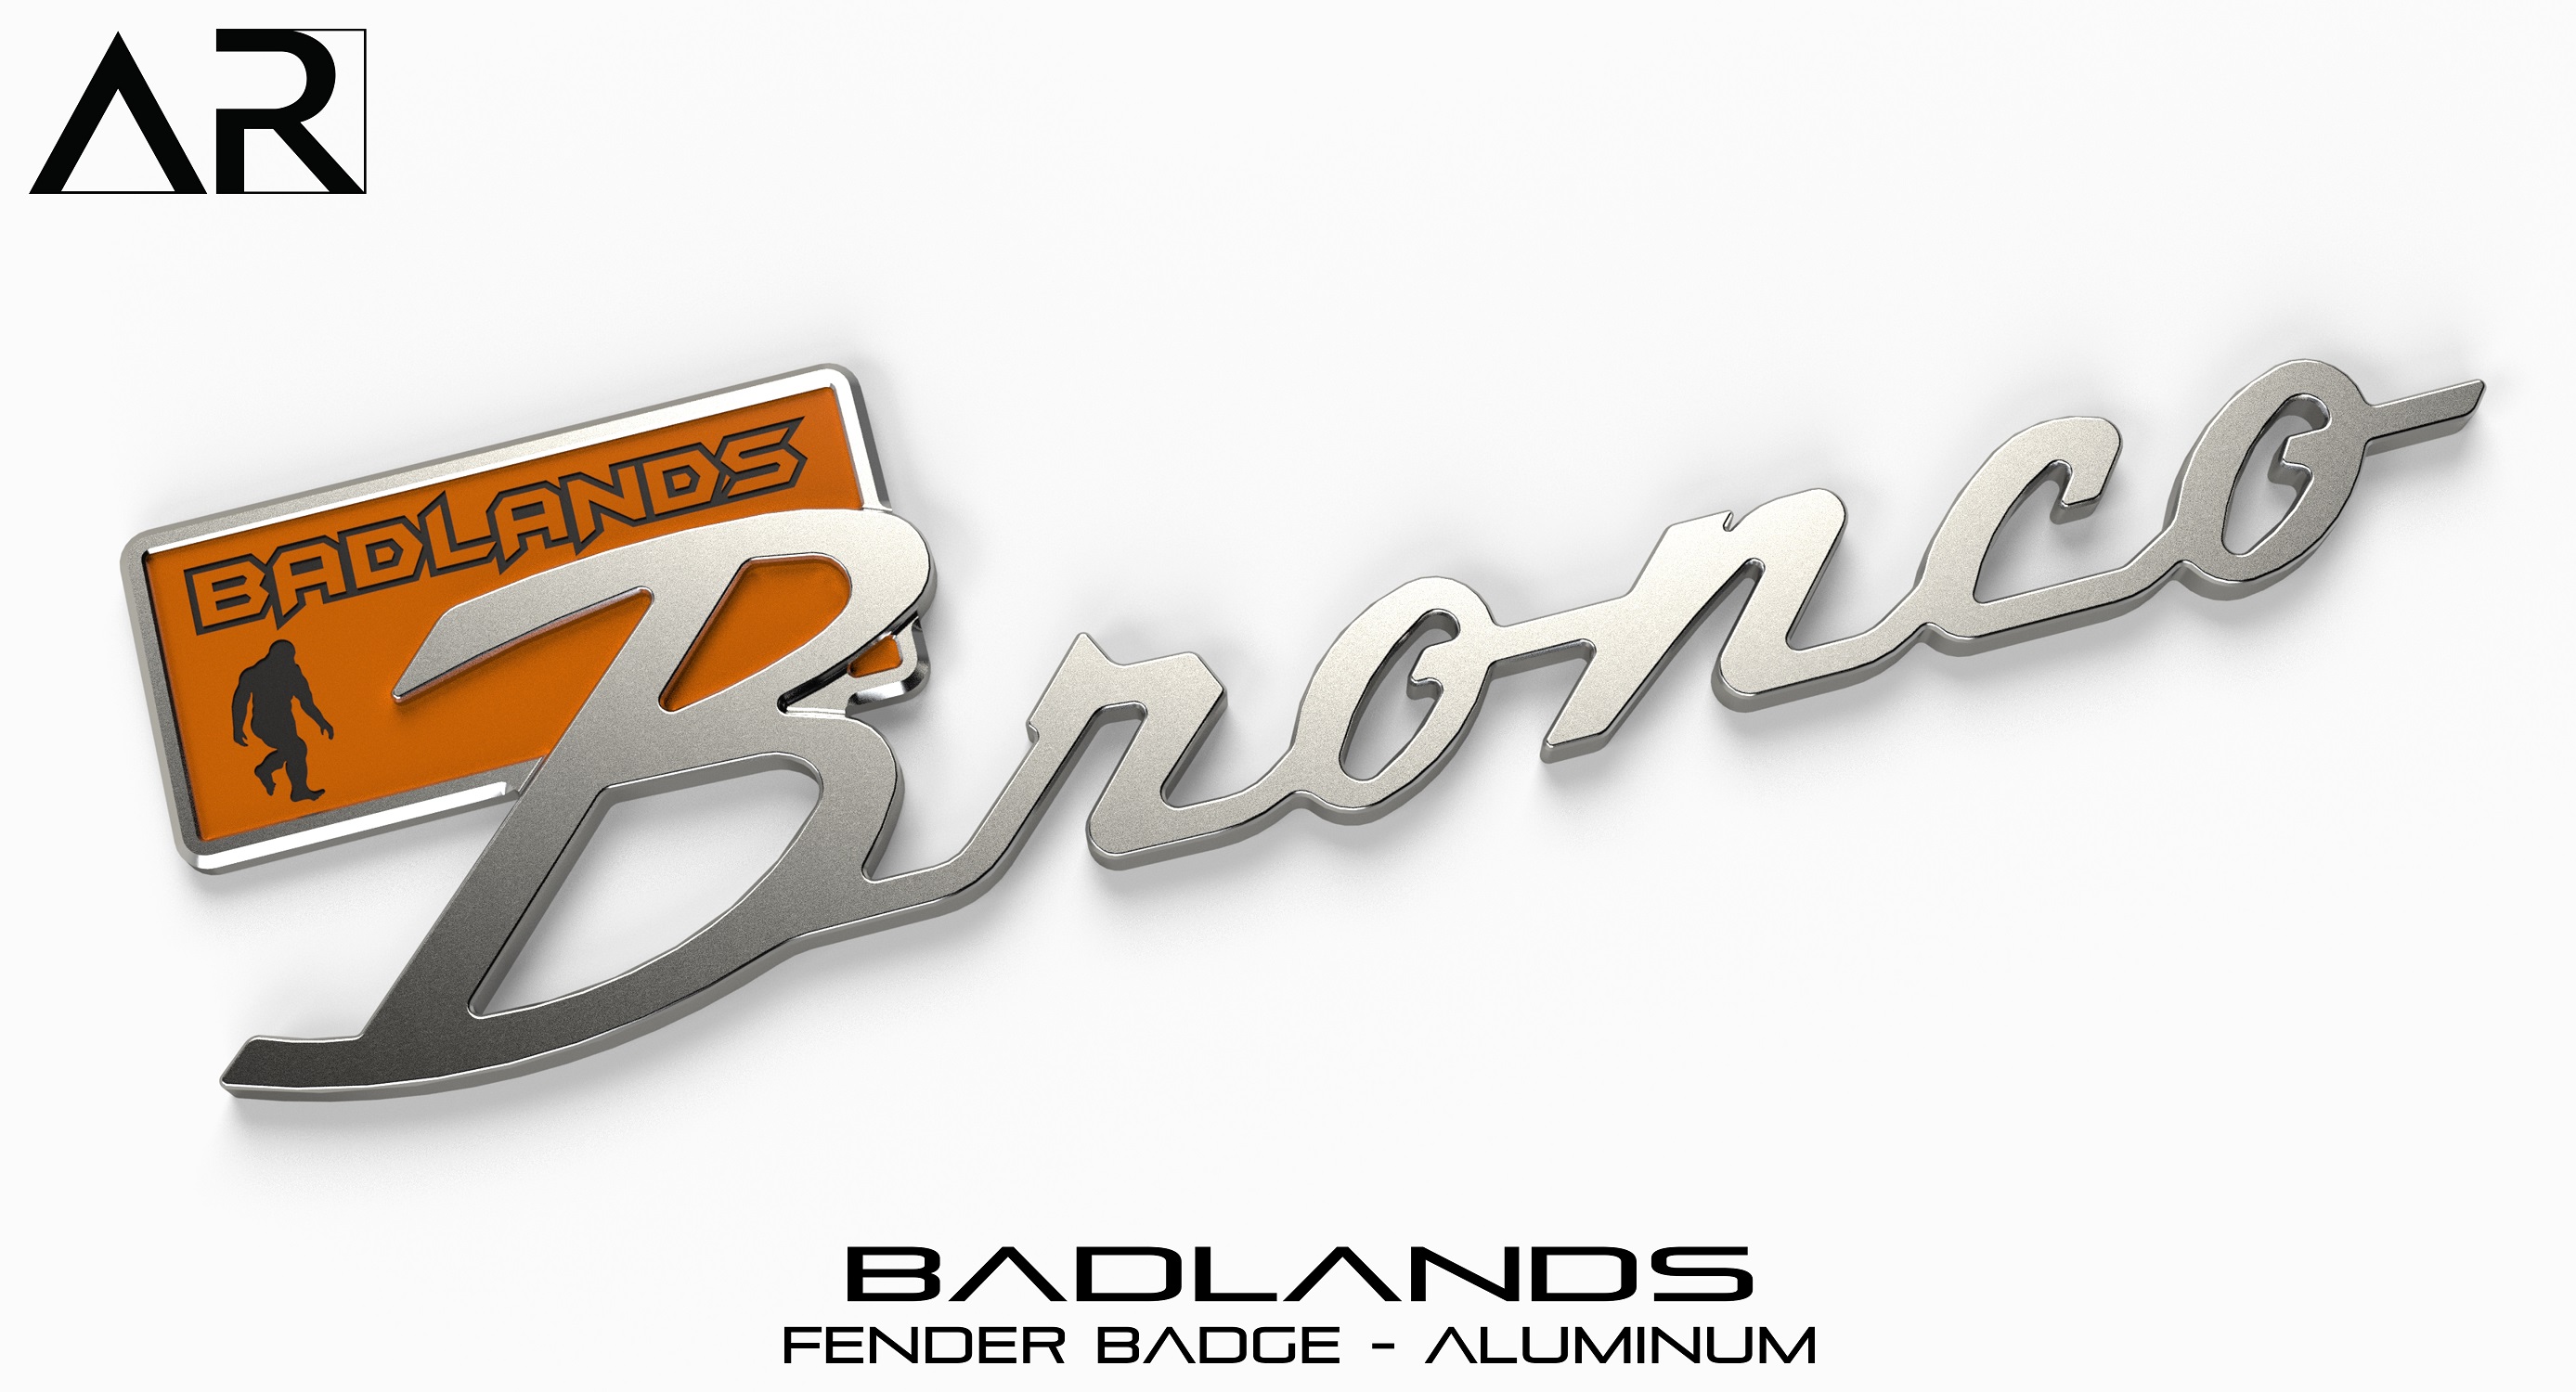 1601004 - Fender Badge  - Badlands - Aluminum.jpg